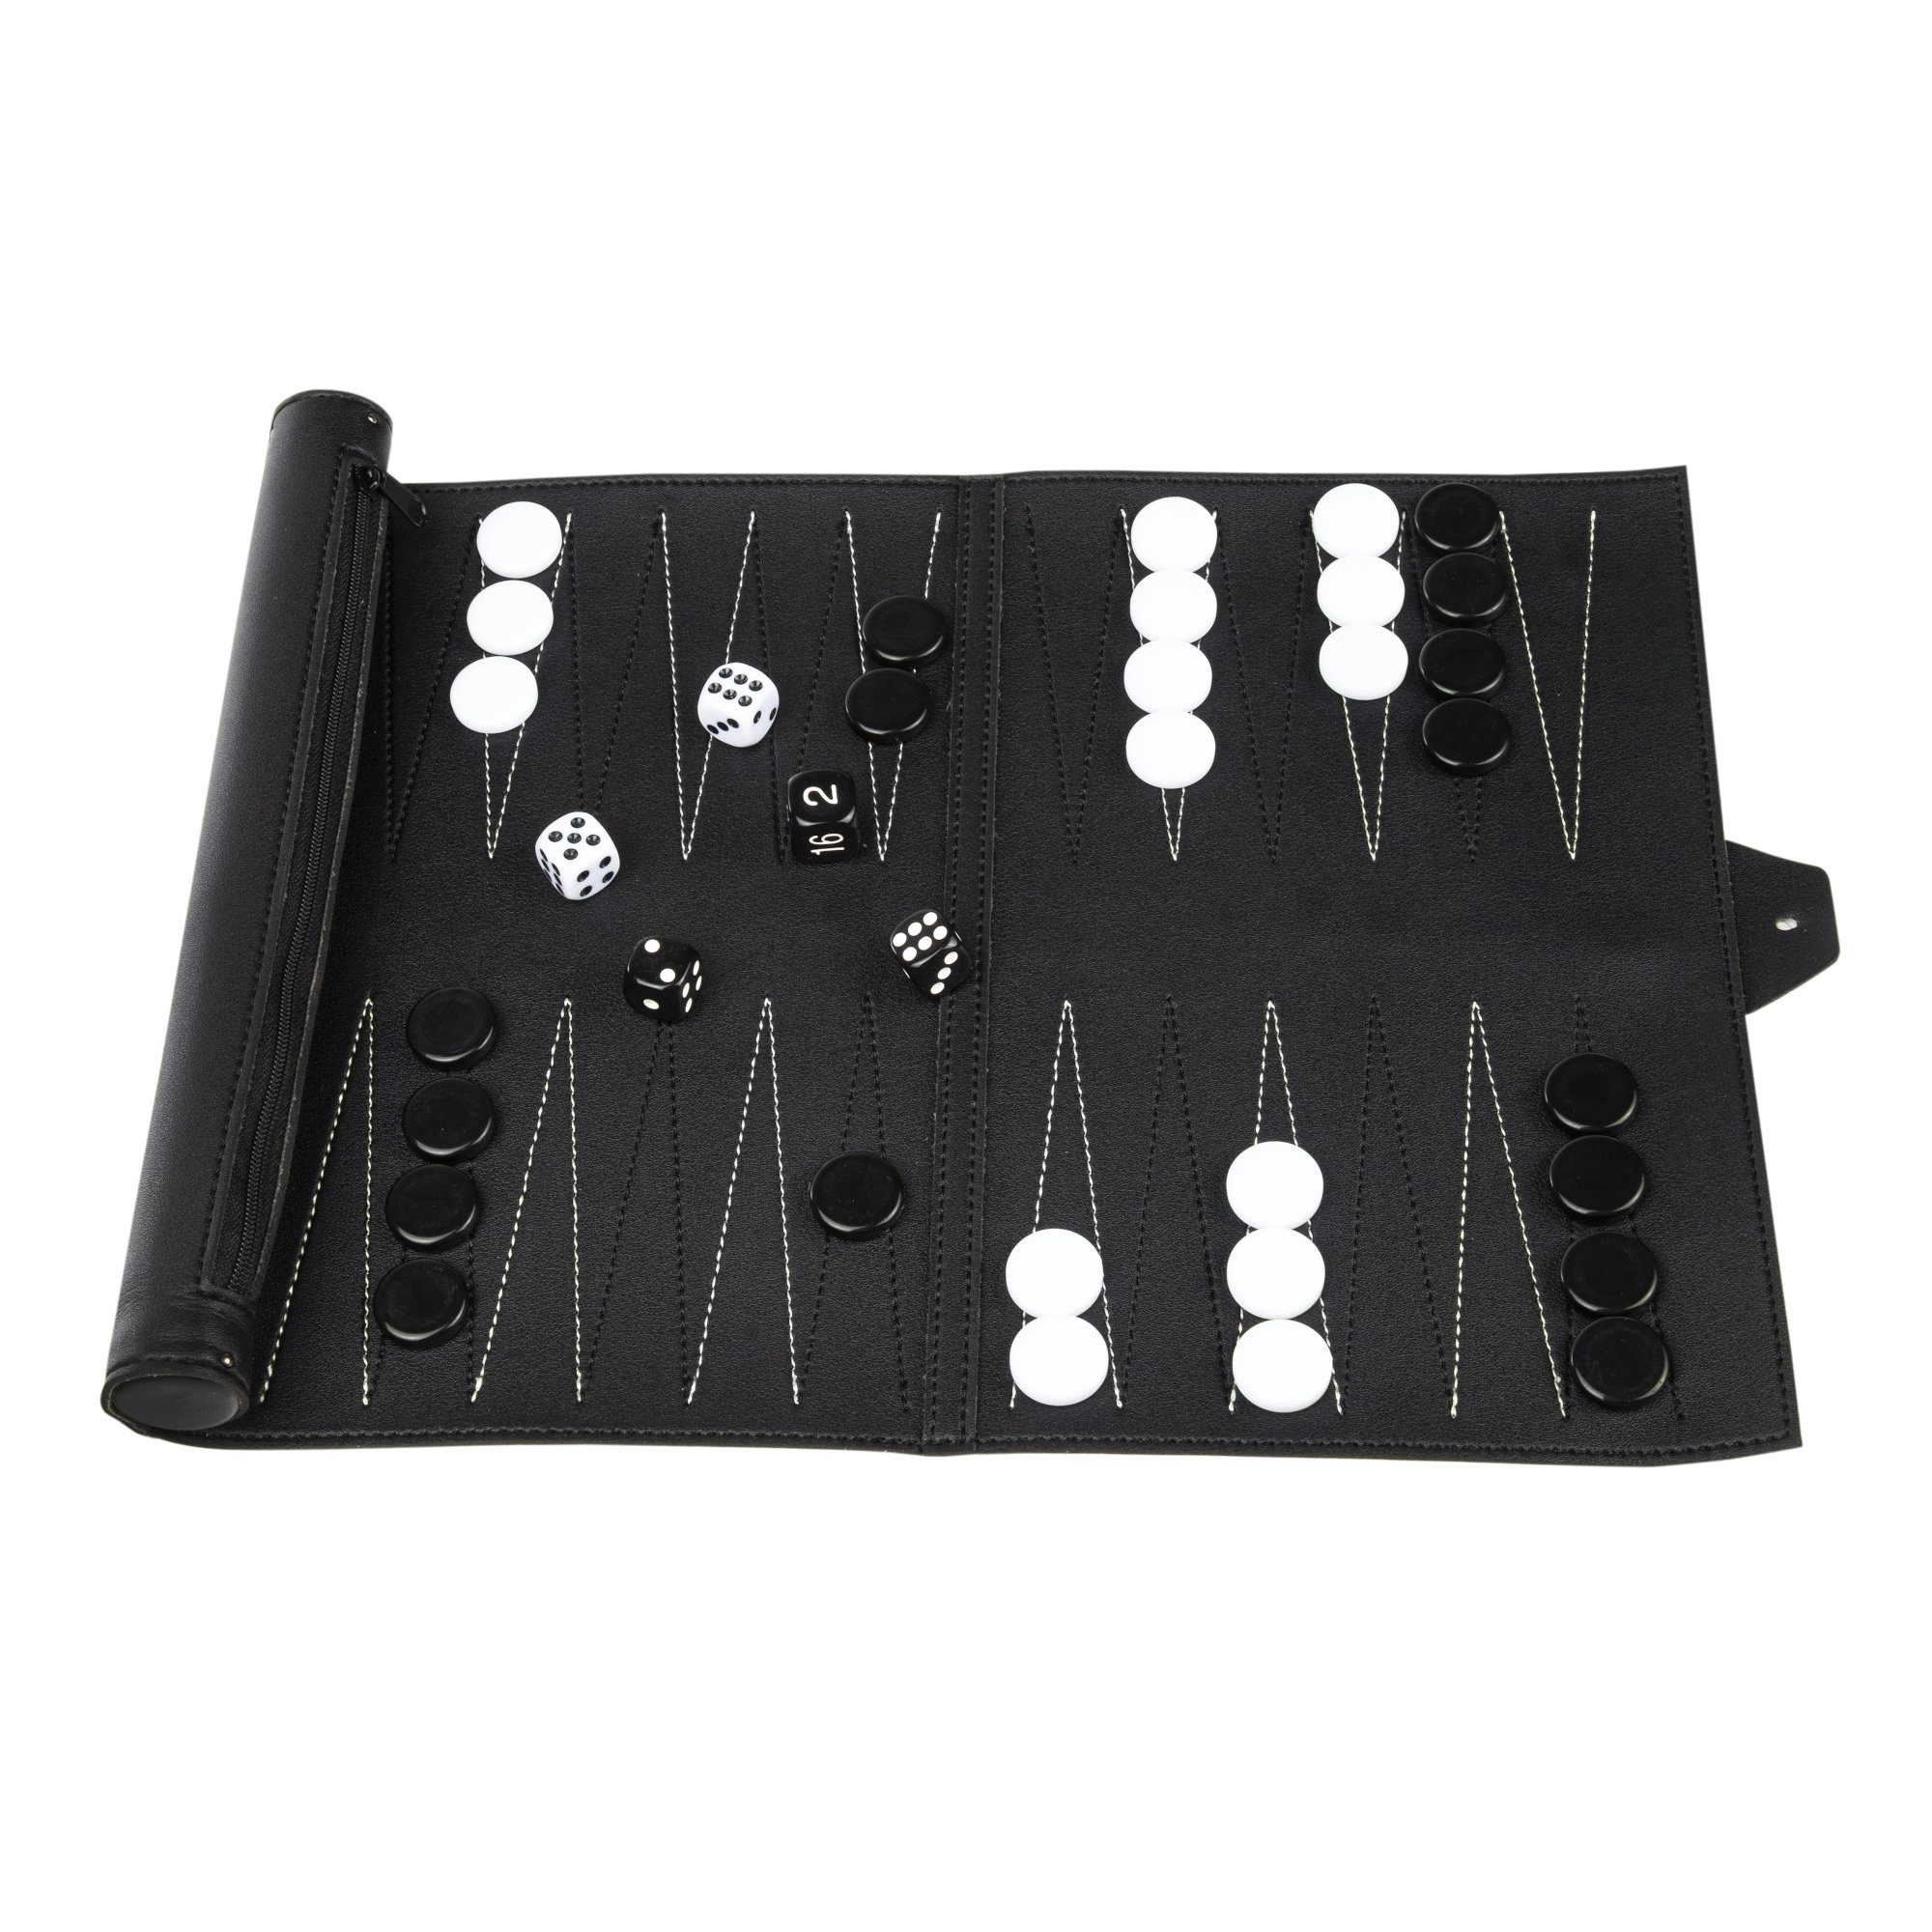 Reisespiel Gravidus Reise-Backgammon Backgammon Reise Kompakt Spiel, Brettspiel